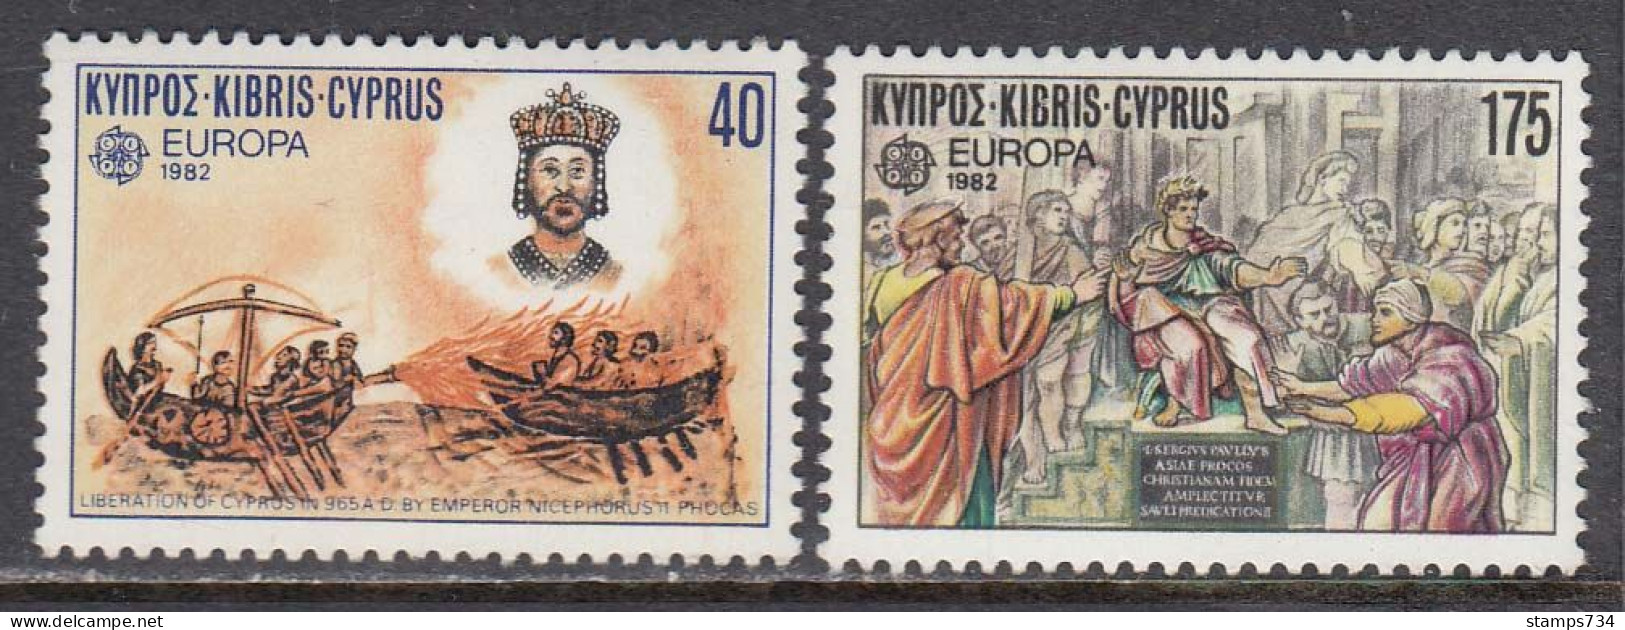 Cyprus 1982 - EUROPA(Faits Historiques), Mi-Nr. 566/67, MNH** - Neufs